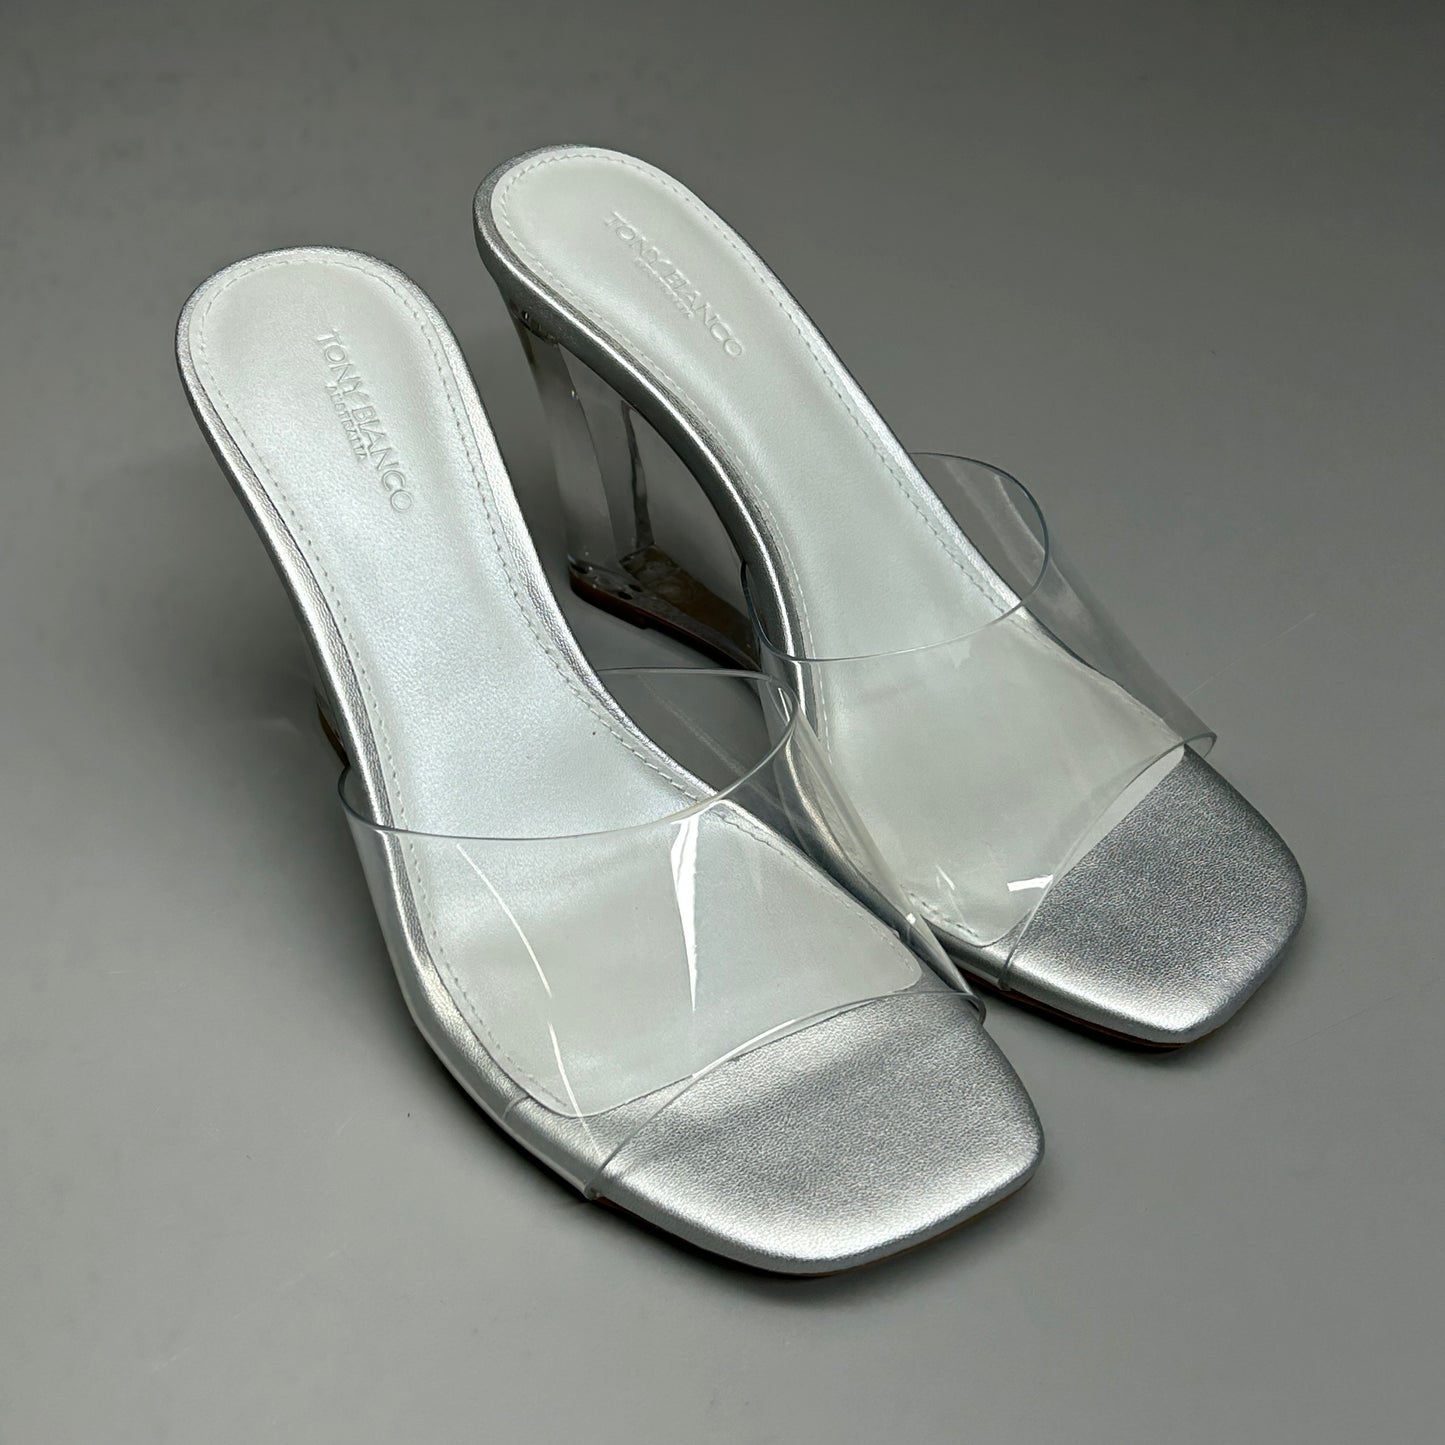 TONY BIANCO Alessi Clear Vinylite/Silver Wedges Women's Heels Sz 8.5 (New)